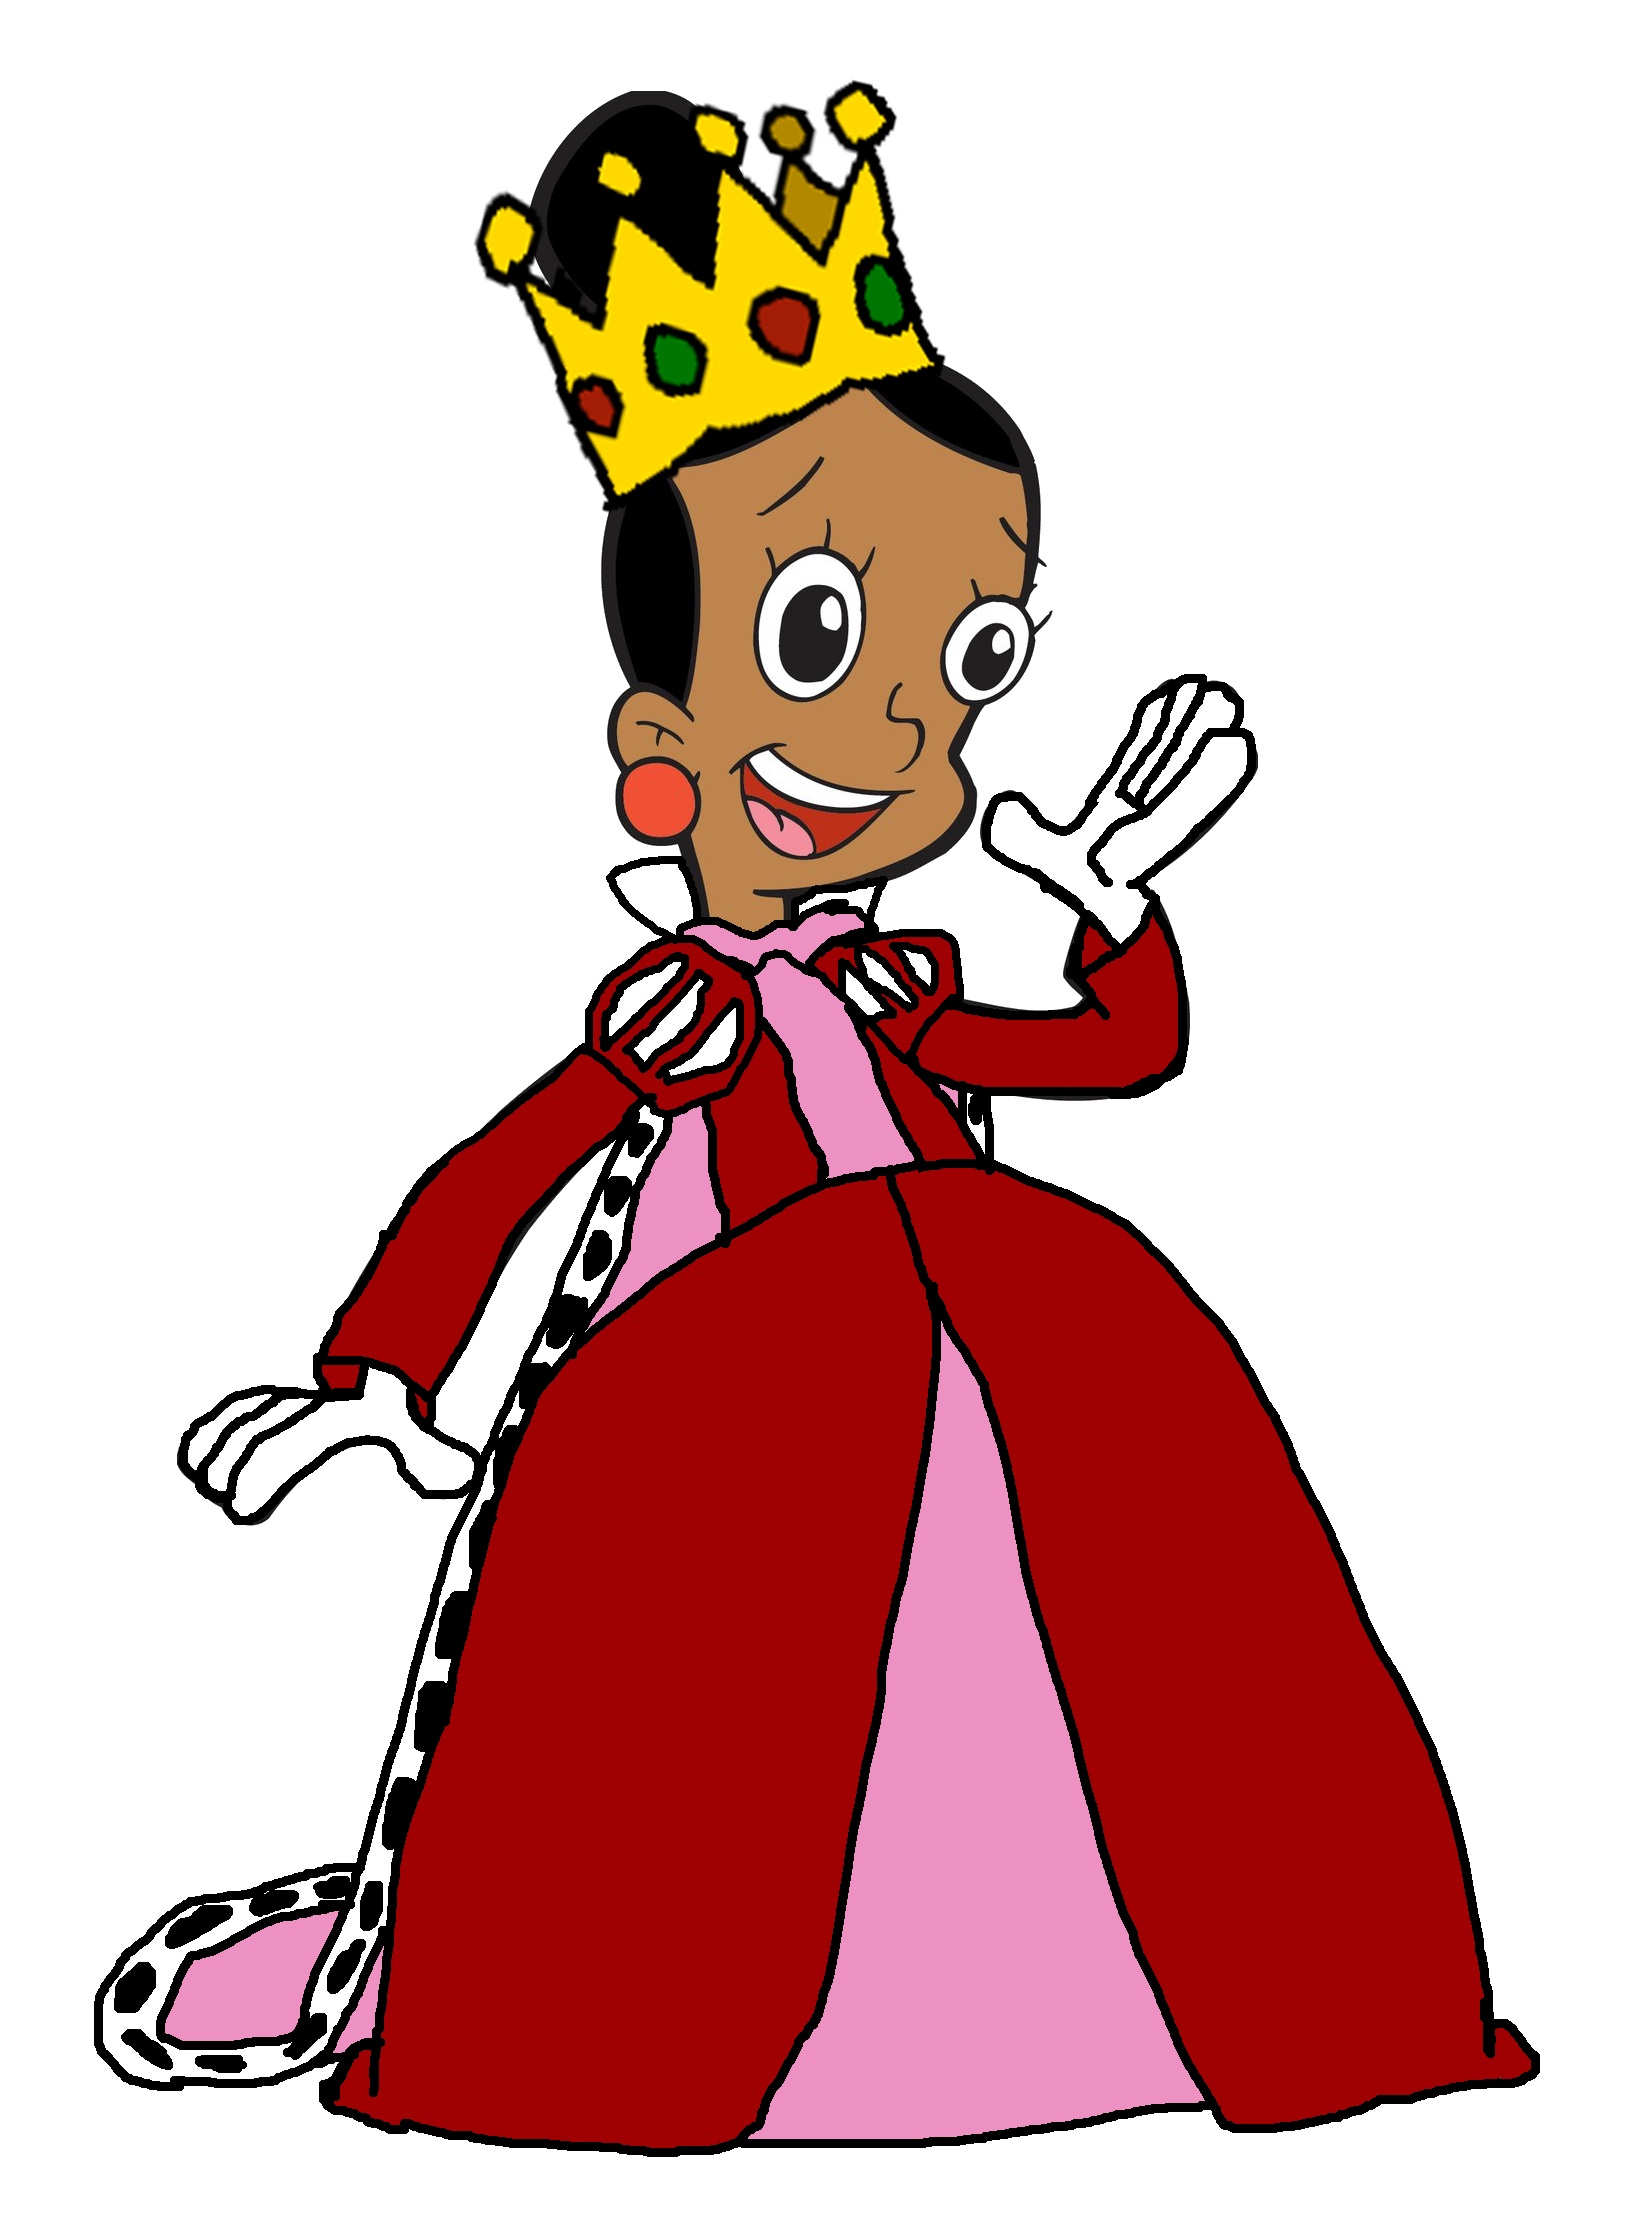 Queen Images Cartoon - Cliparts.co